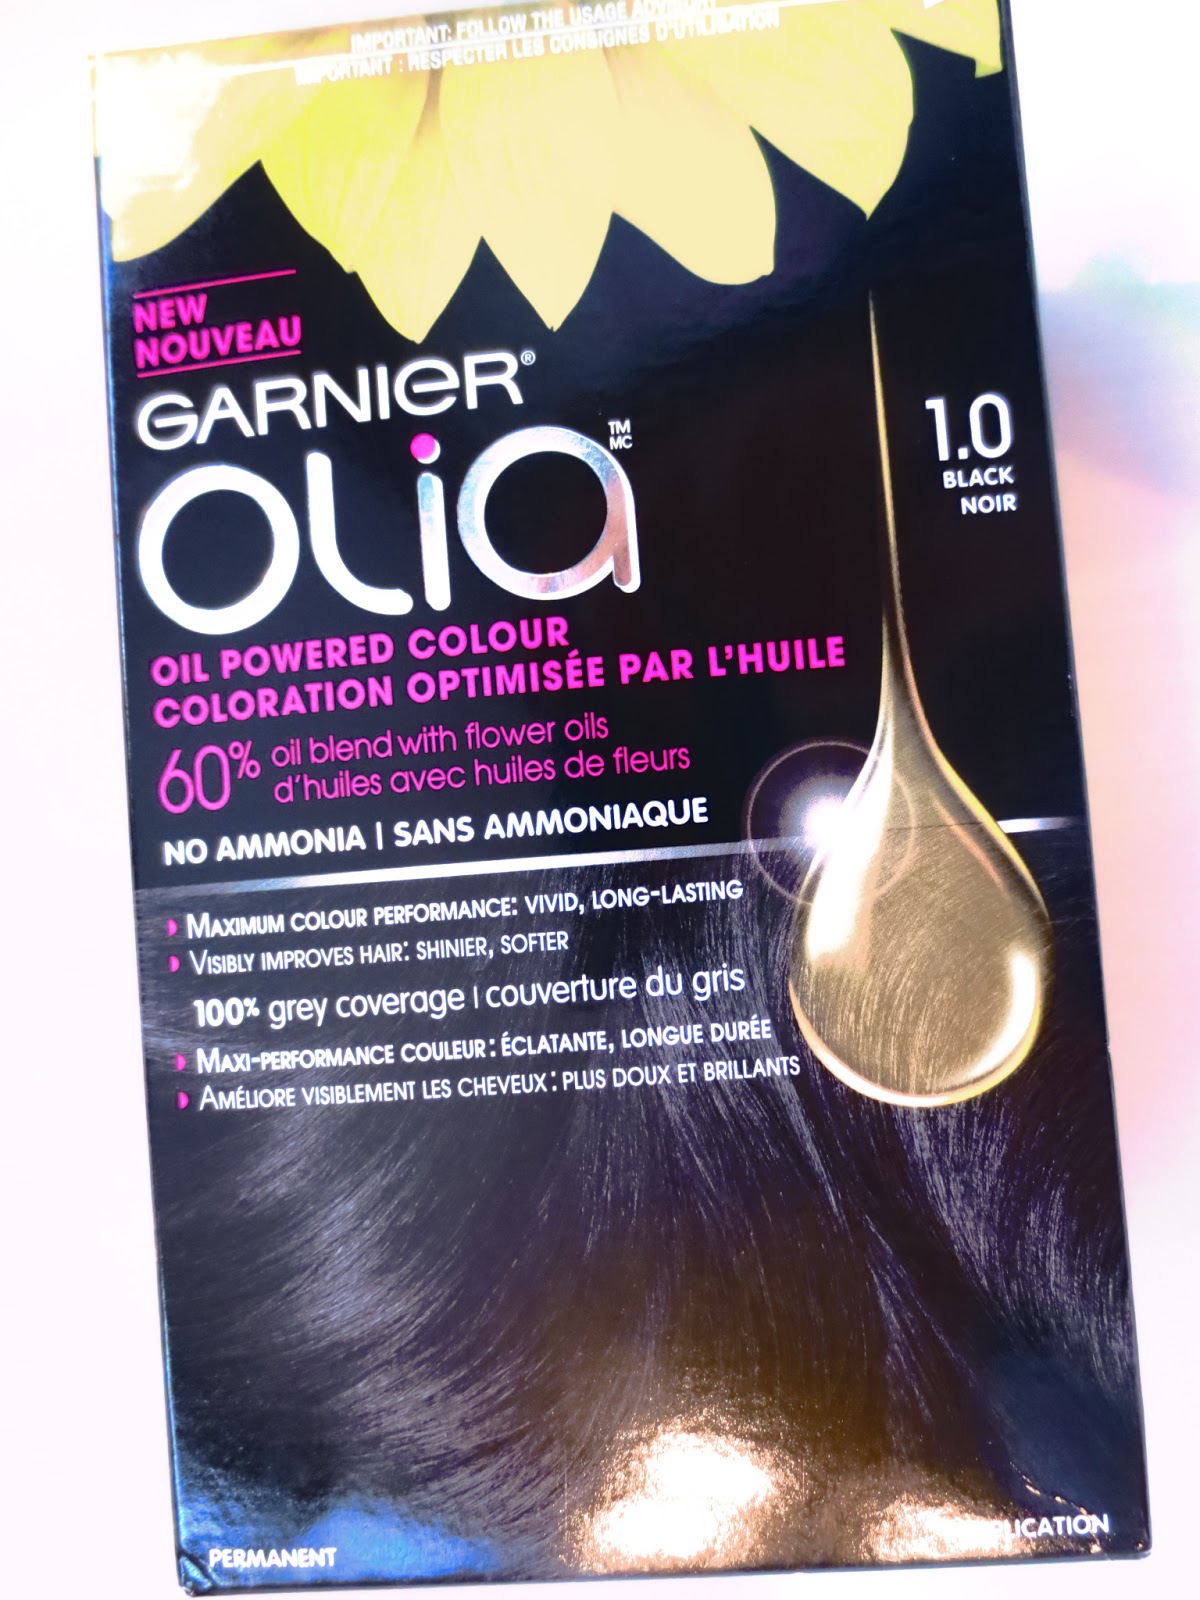 garnier-olia-hair-color-review-my-blog-spot